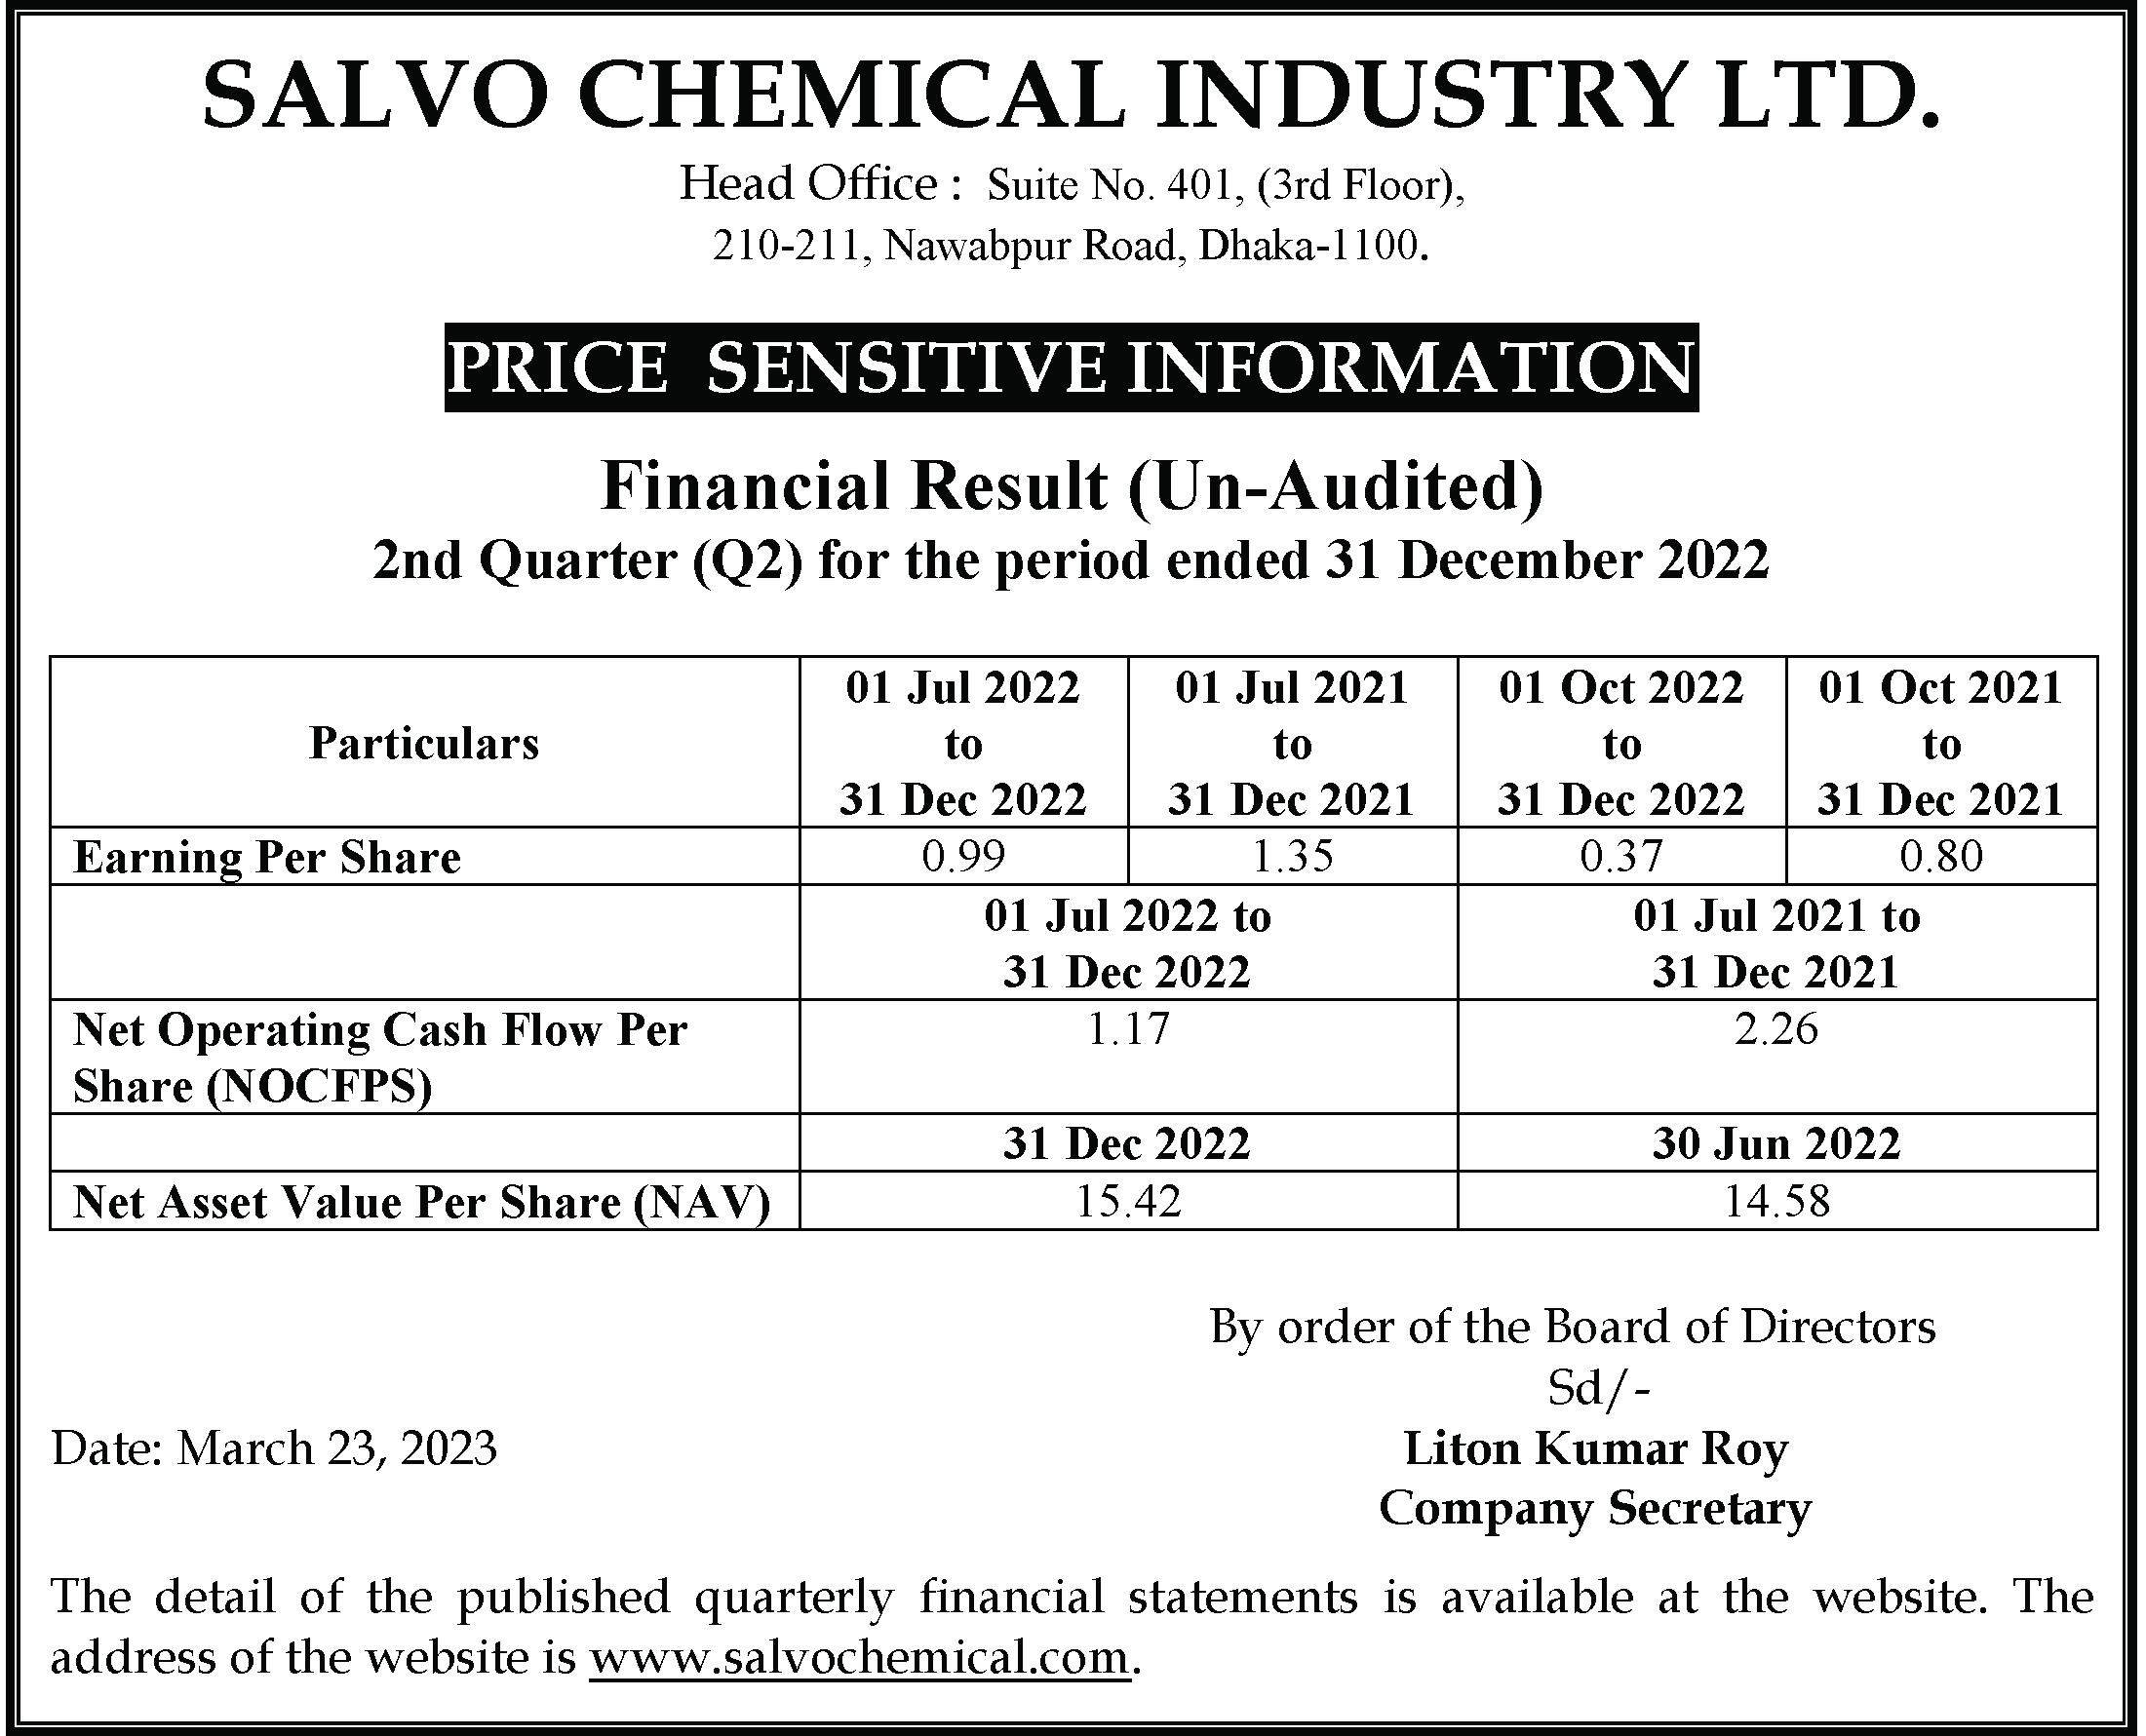 Price Sensitive Information Second-Quarter (Q2) of Salvo Chemical Industry Ltd